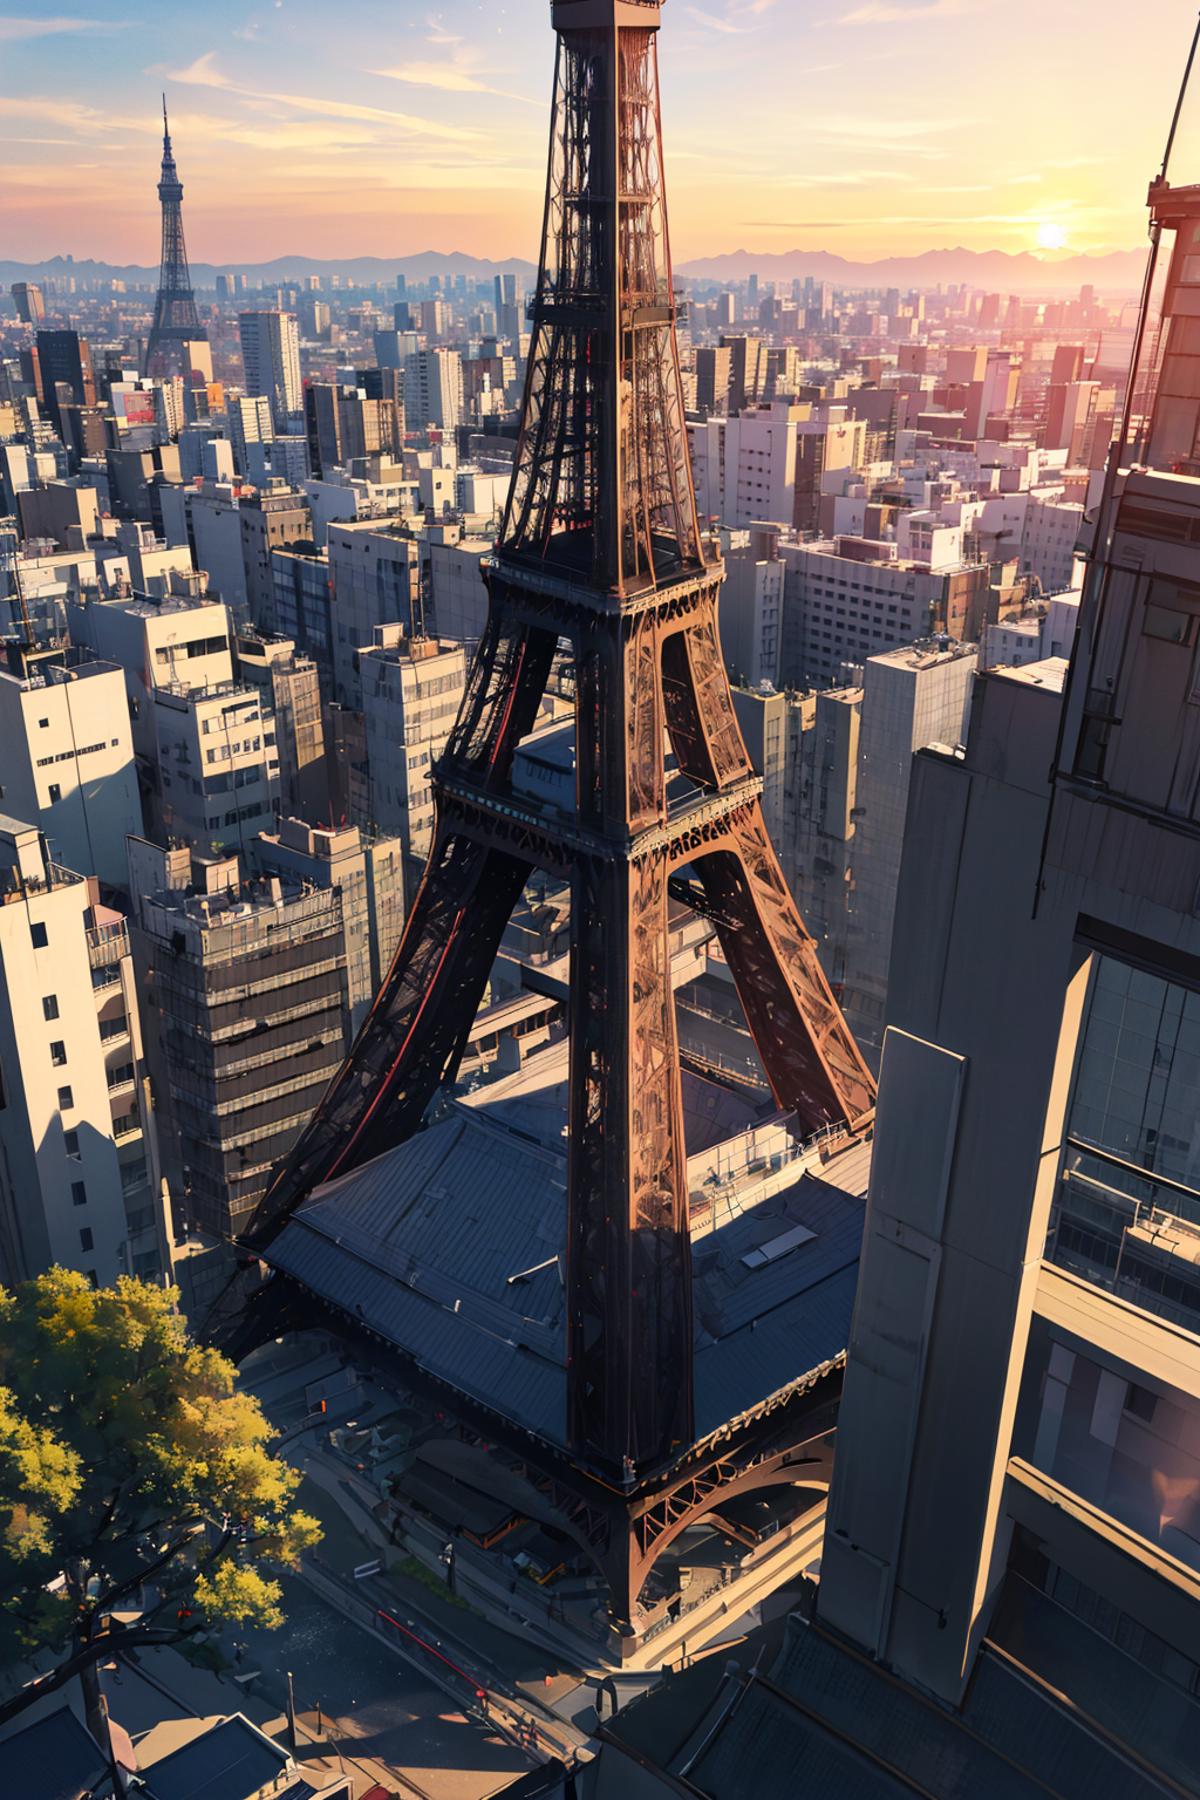 Eiffel Tower image by Tokugawa